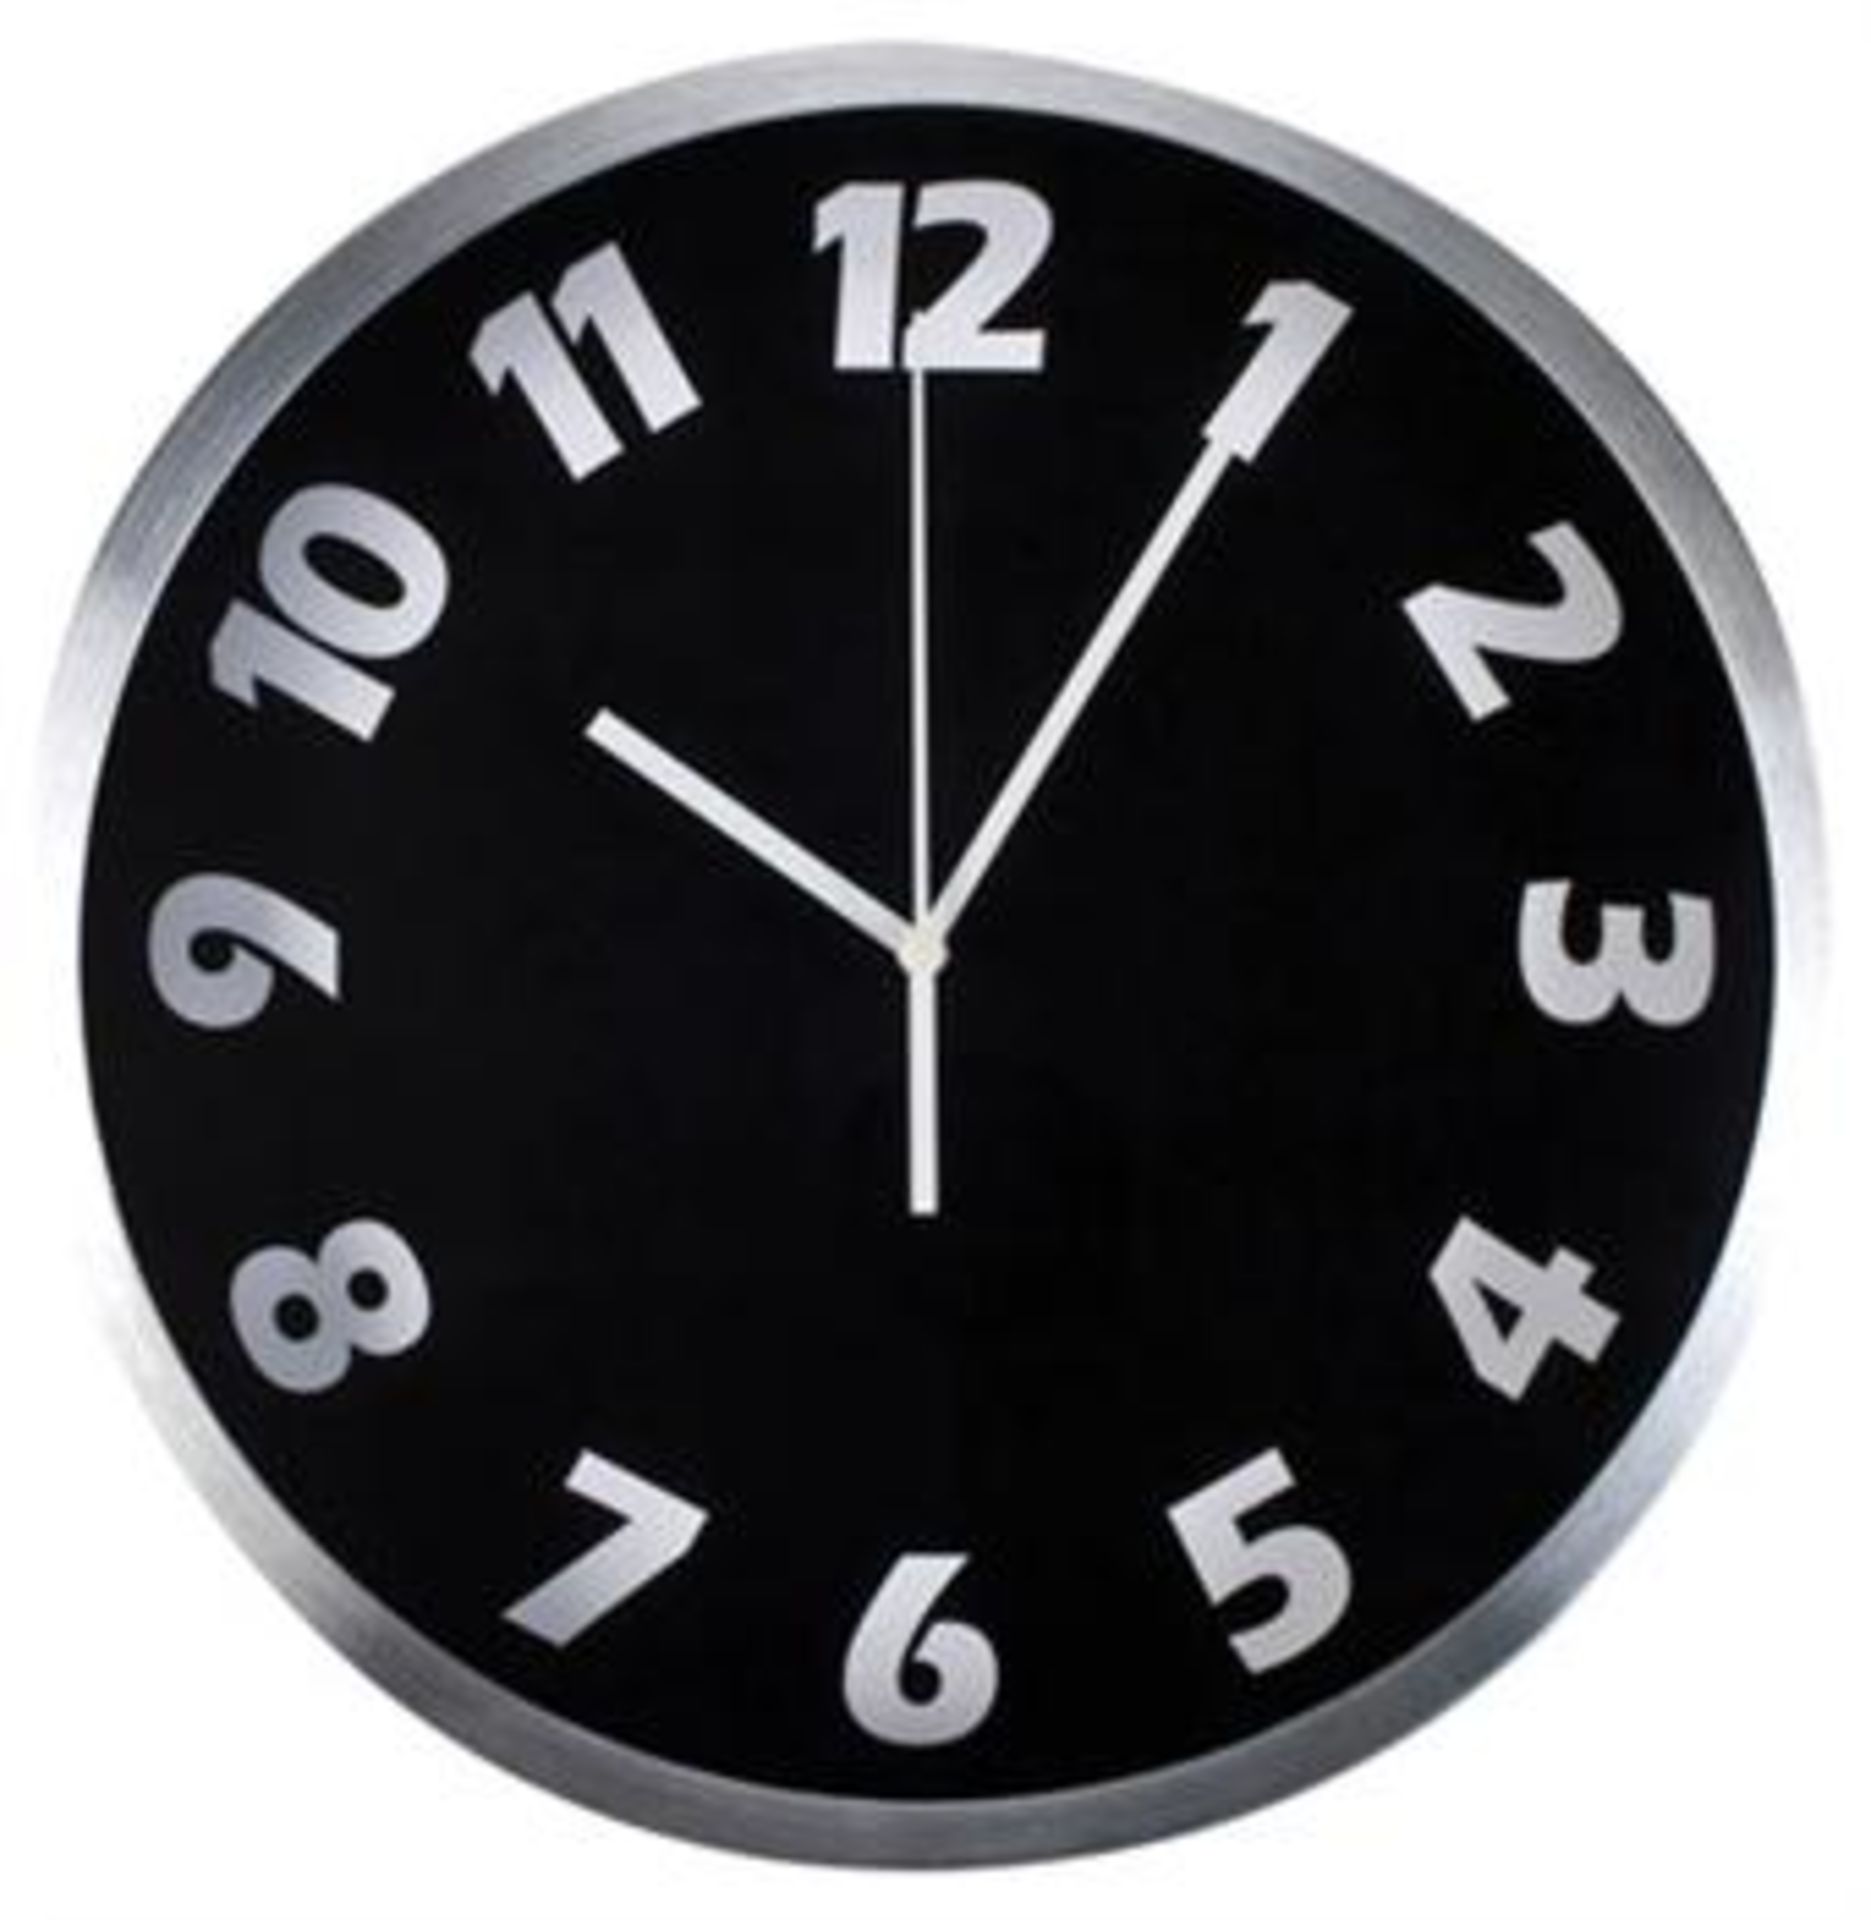 V Brand New Brushed aluminium case wall clock 30cm diameter RRP 39.99 X 2 YOUR BID PRICE TO BE